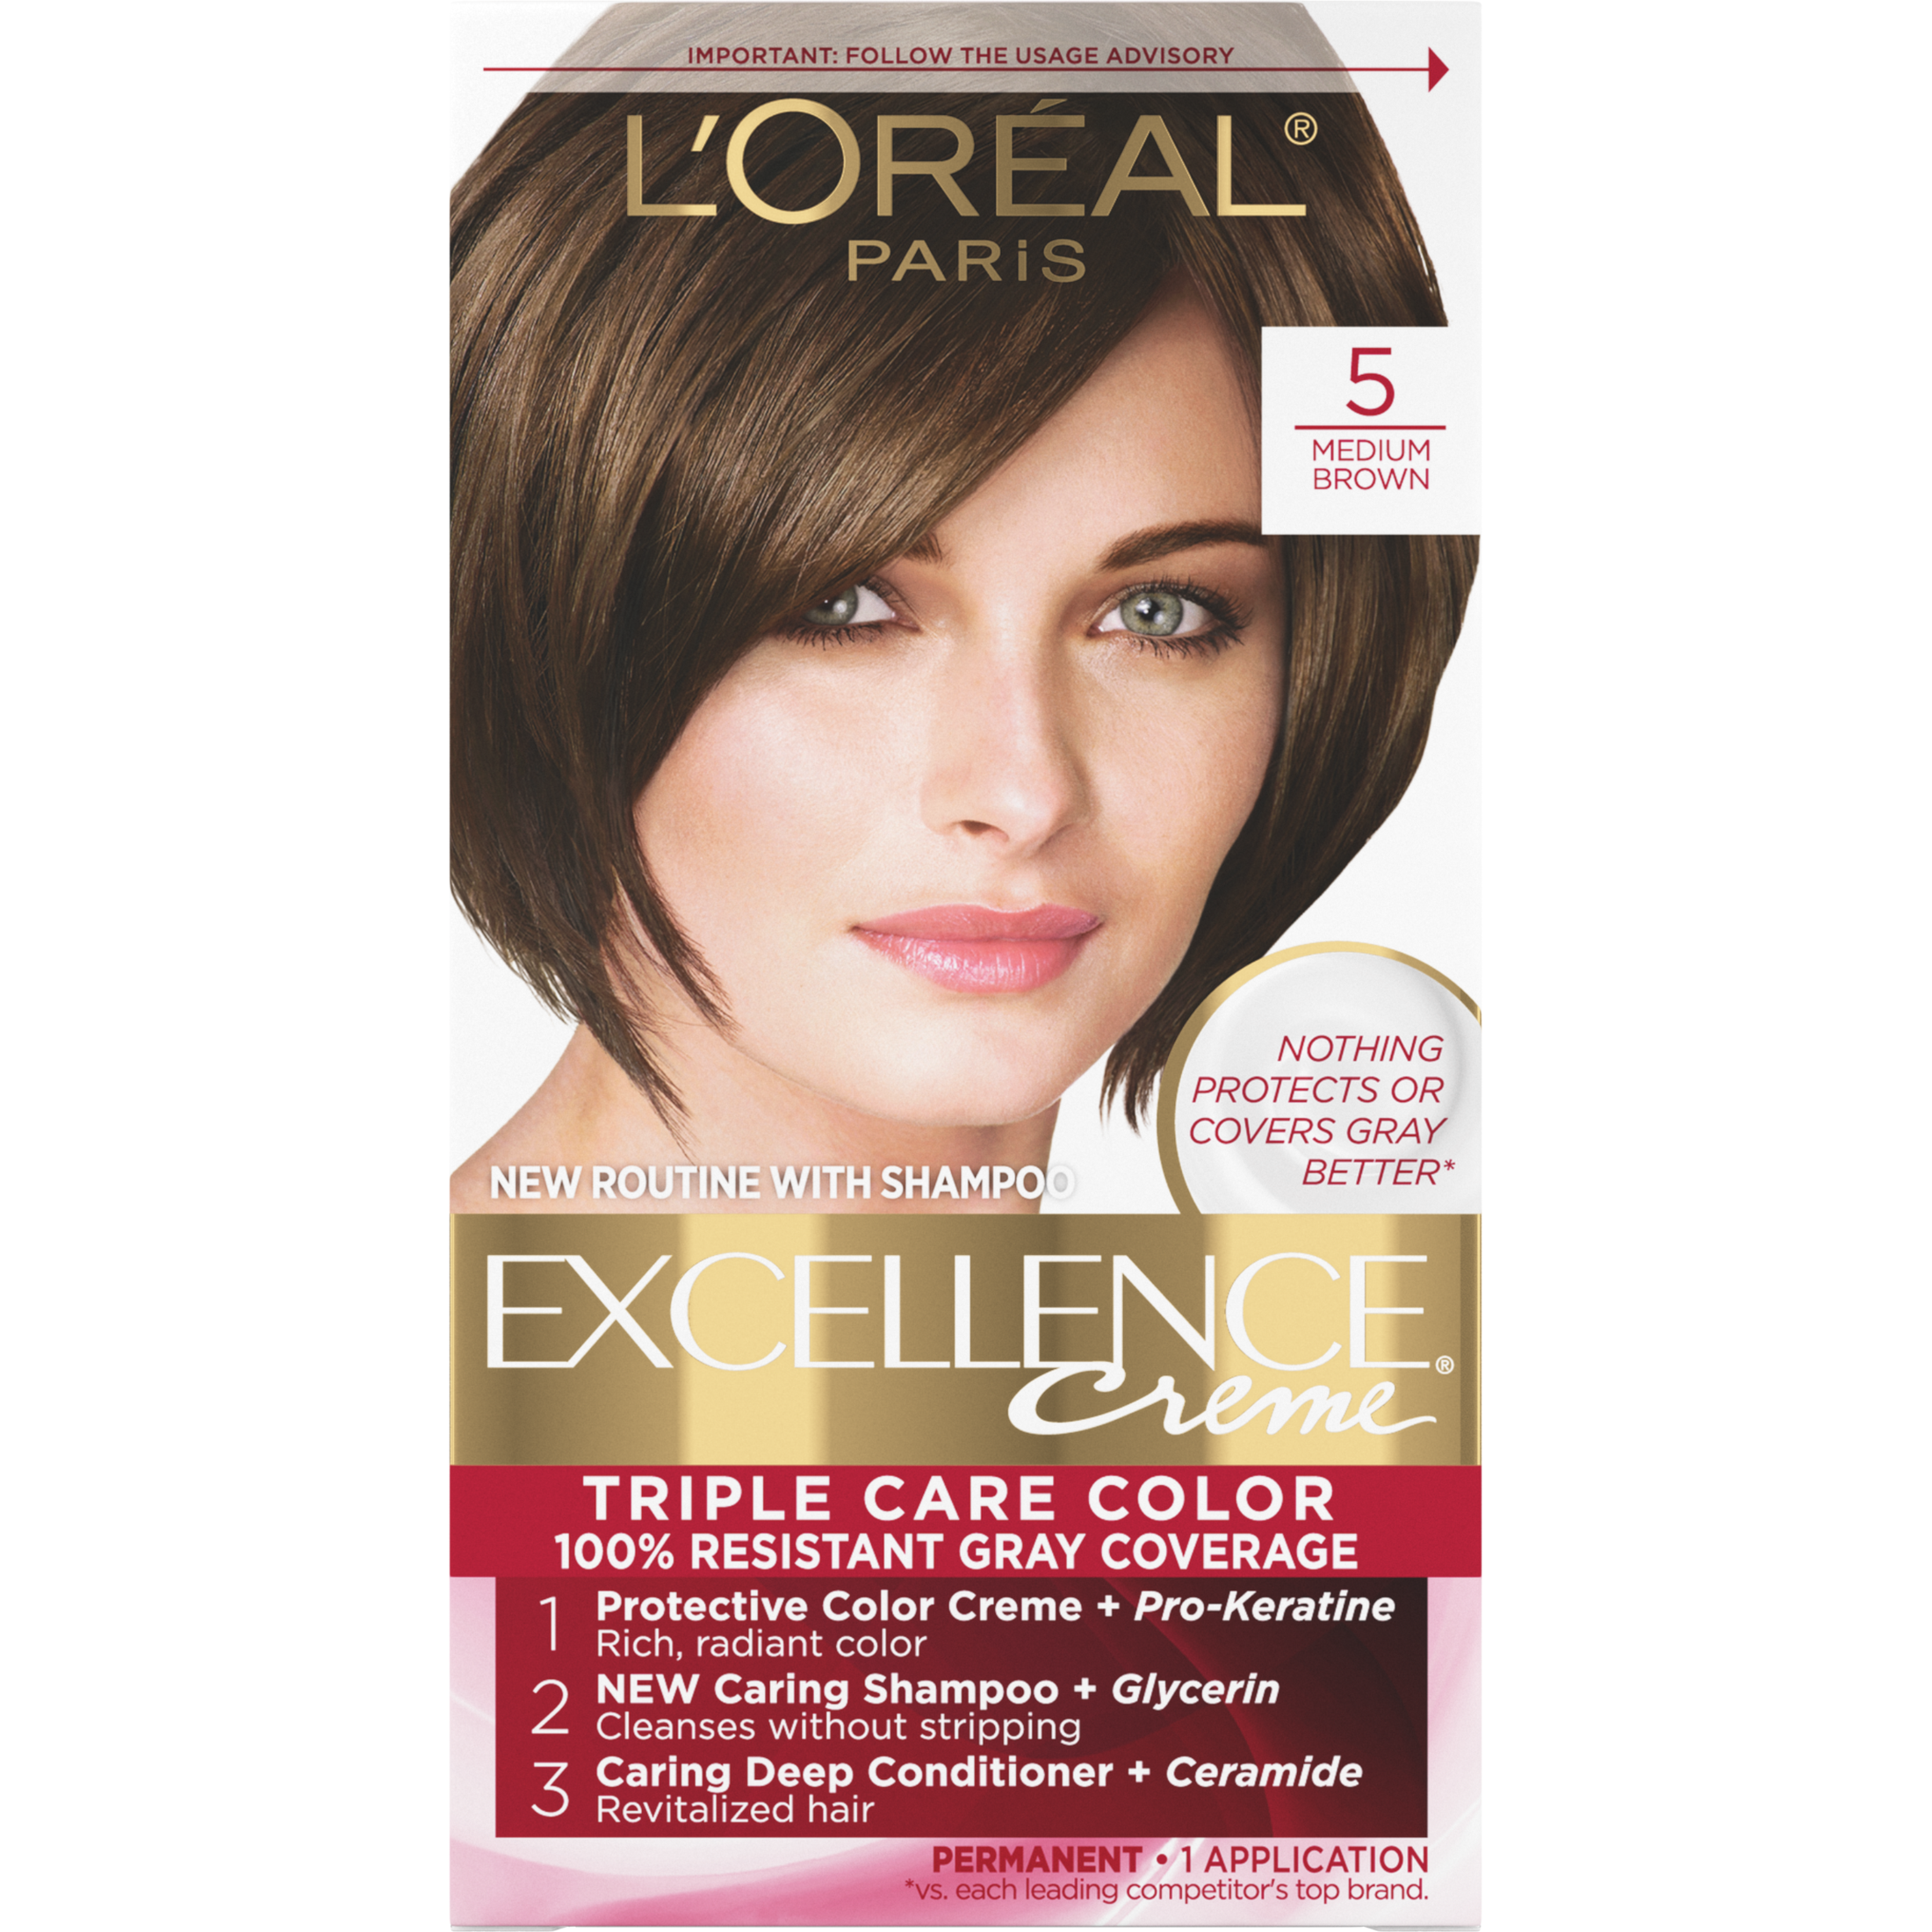 L'Oreal Paris Excellence Creme Permanent Hair Color, 5 Medium Brown - image 1 of 8